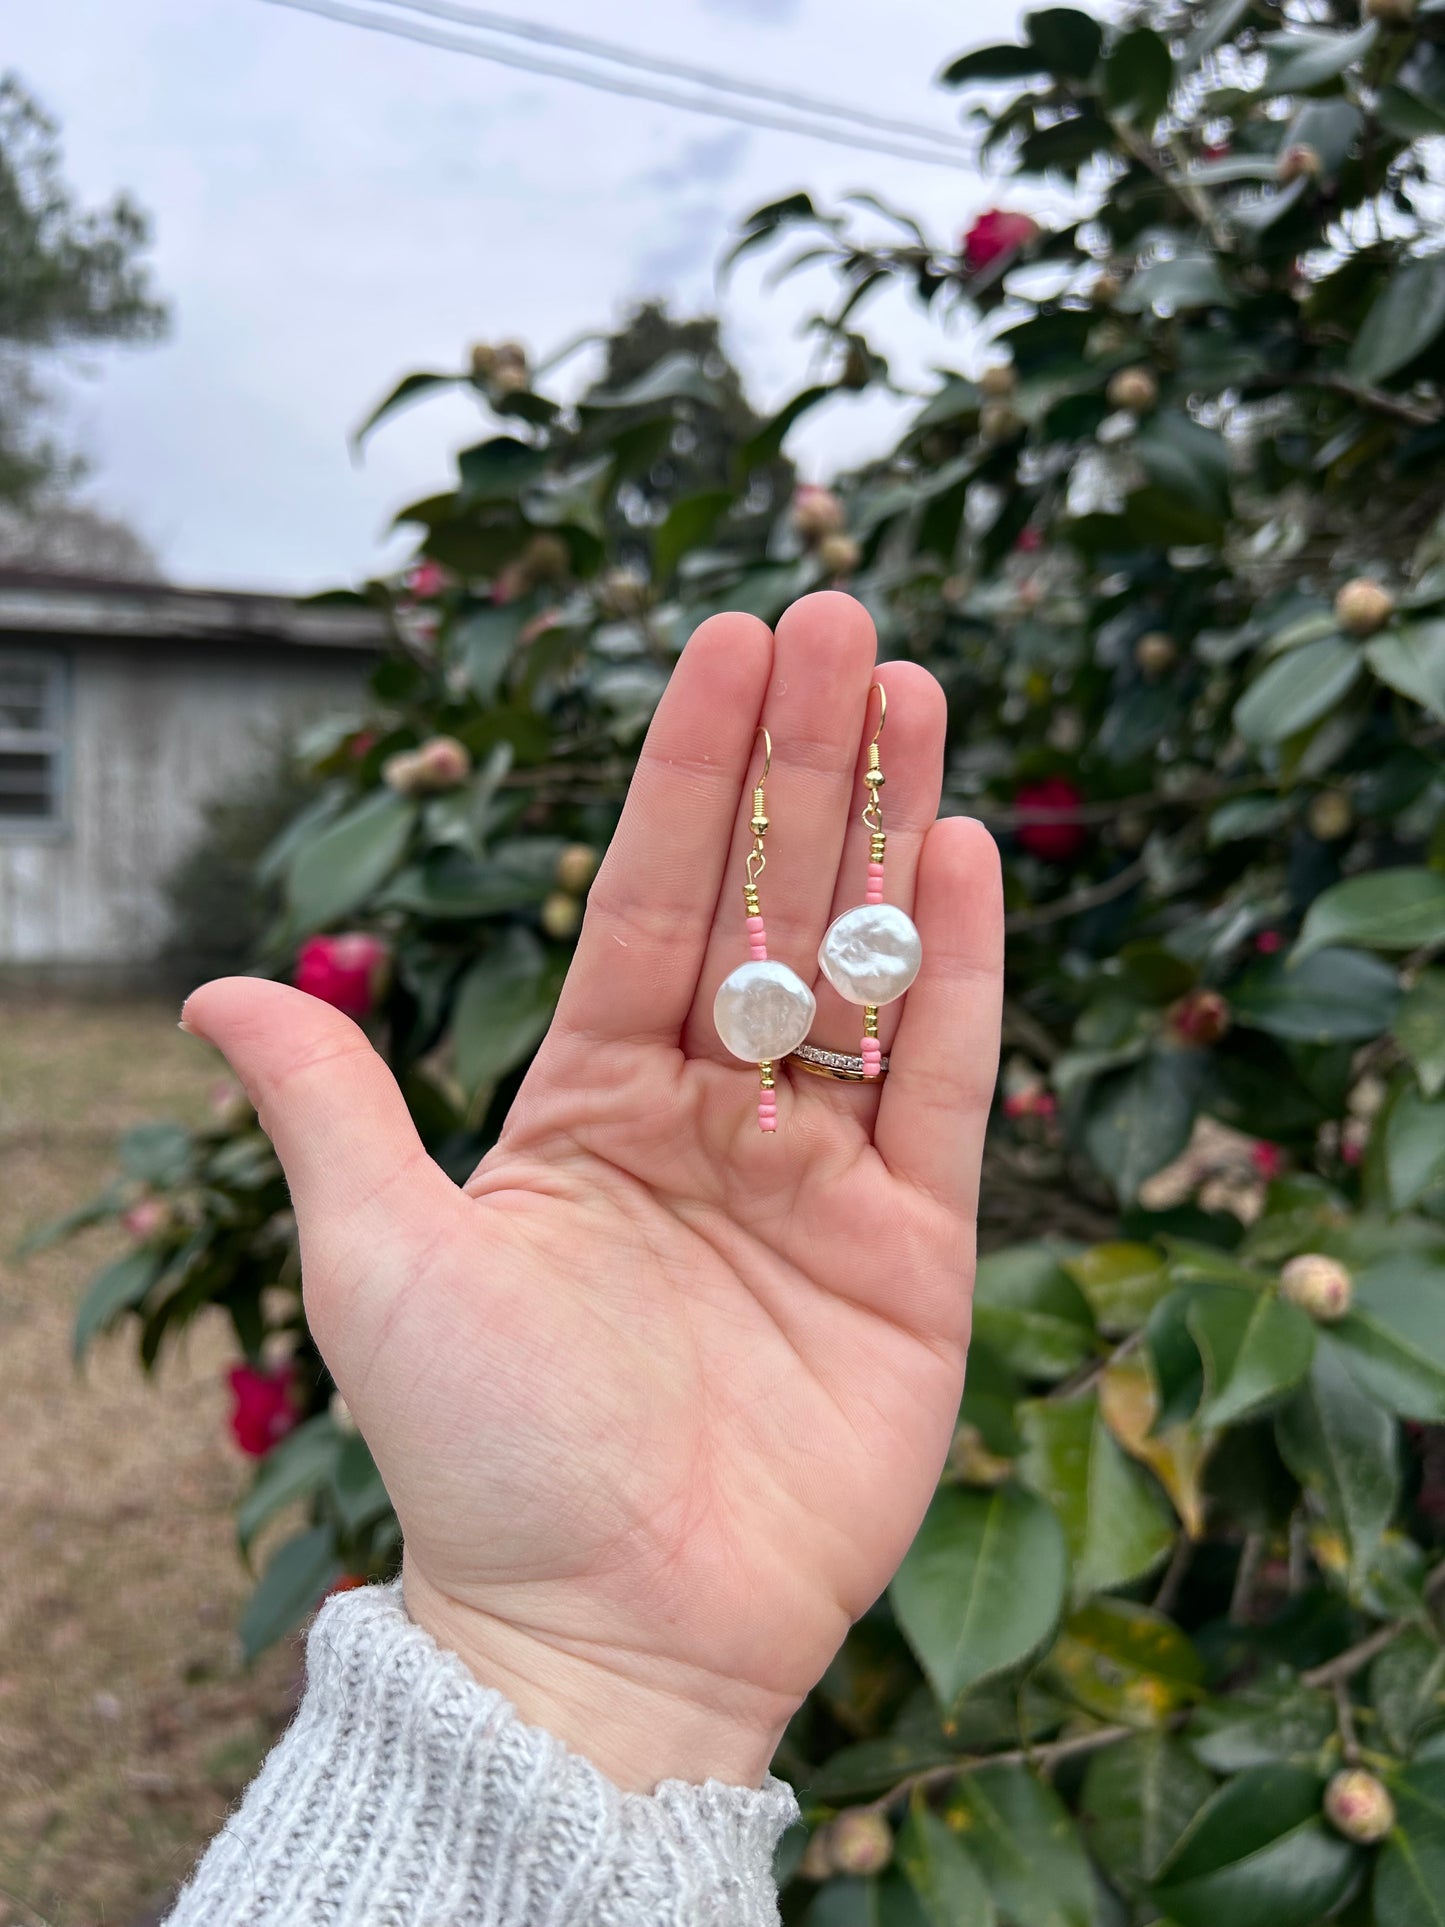 Hudson’s pearl earrings